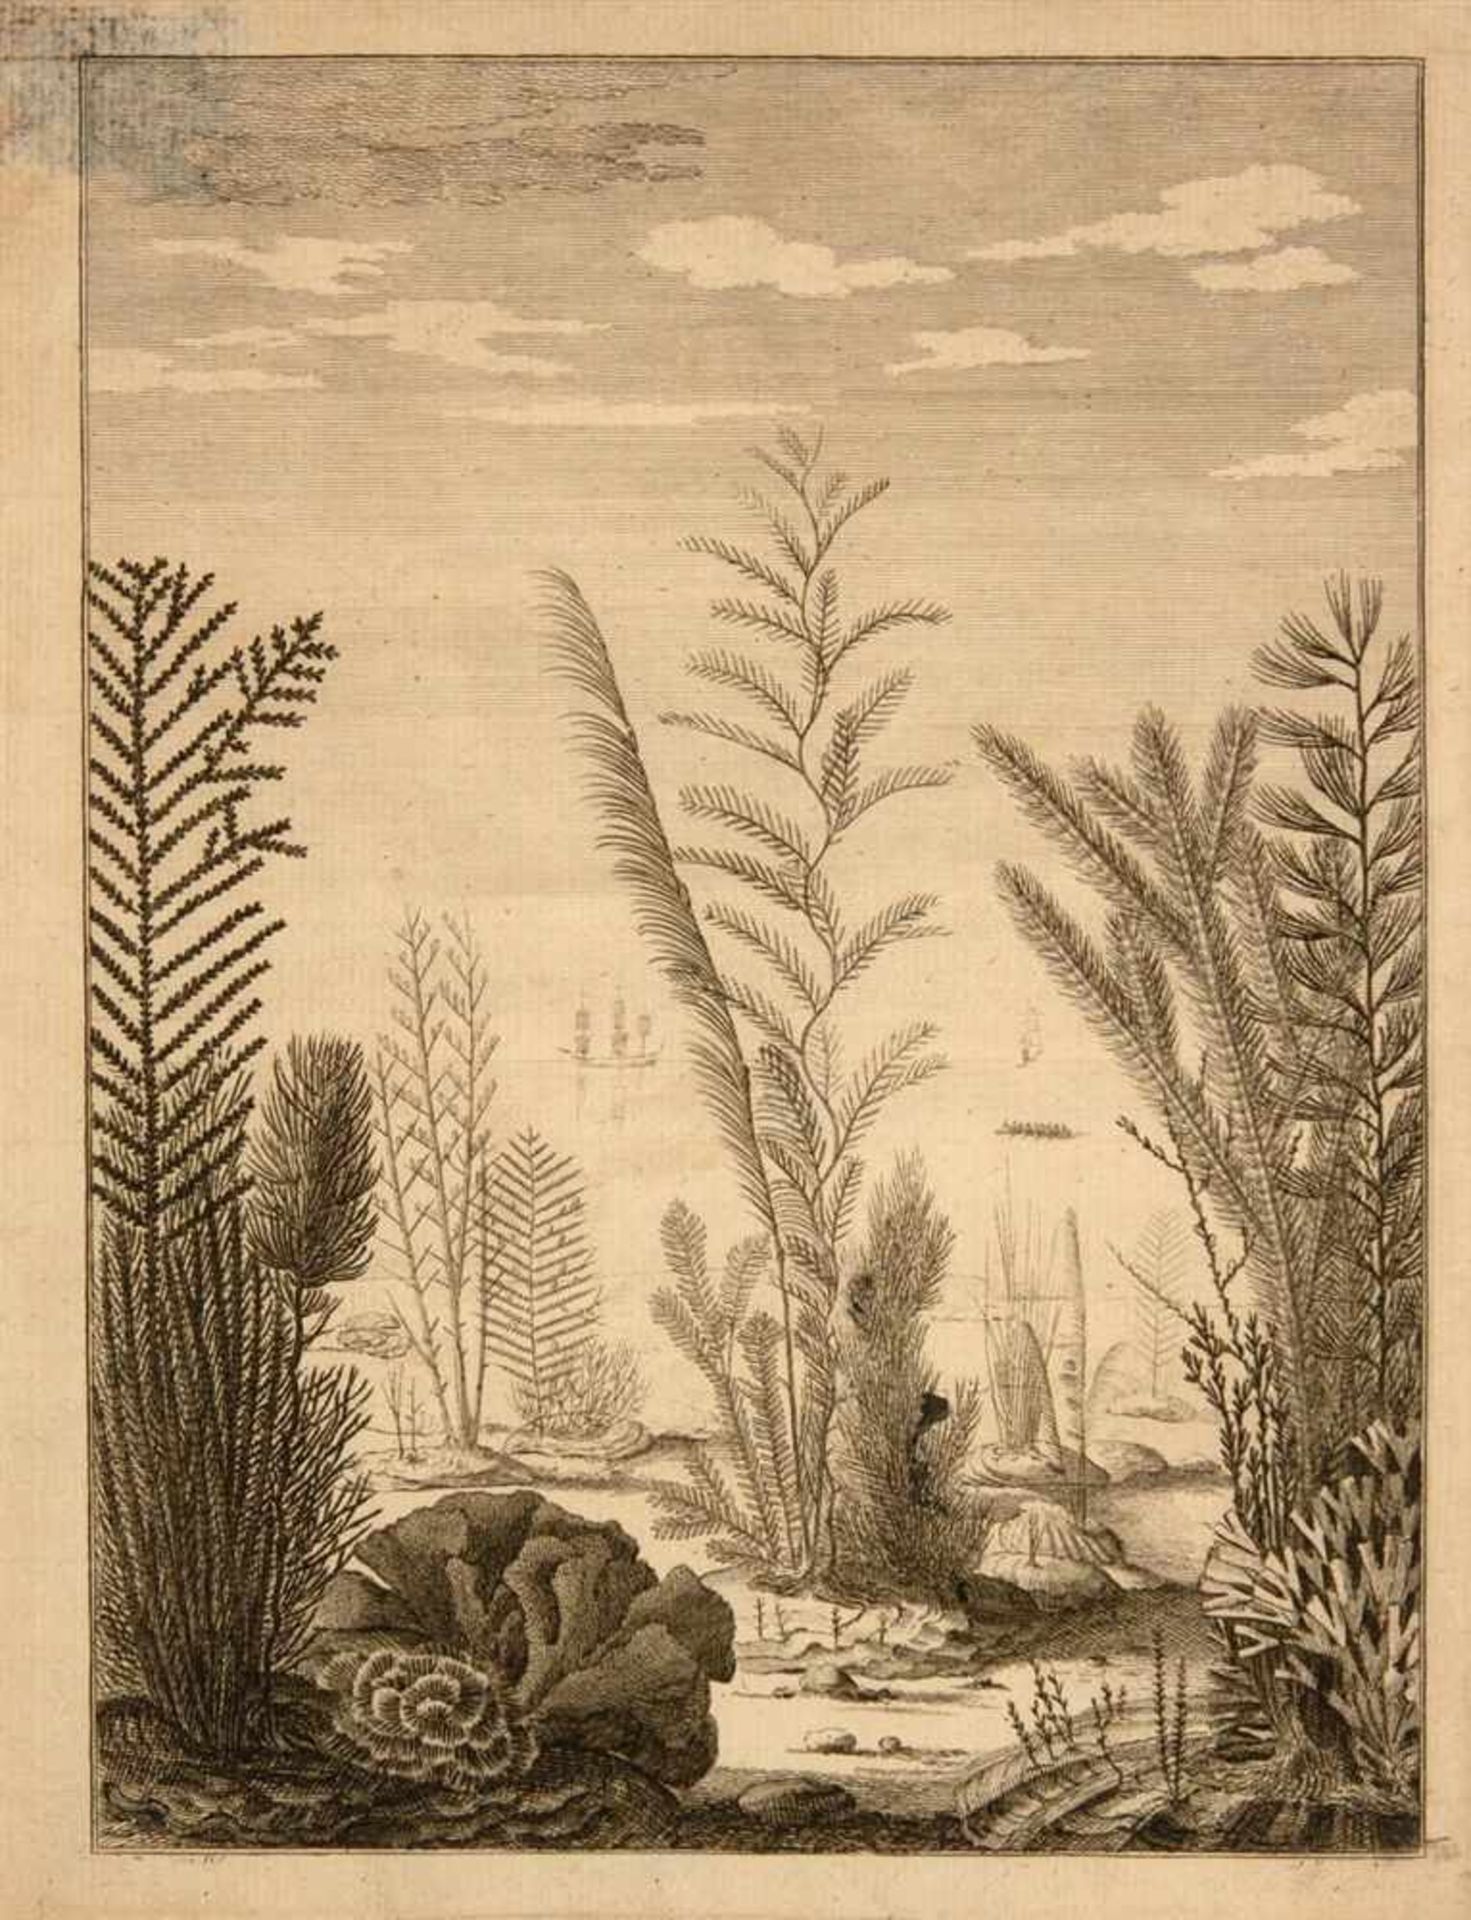 Korallen. - 2 naturwissenschaftliche Werke über Meeresbiologie. Den Haag 1756-1758. 25,7 x 20 cm.